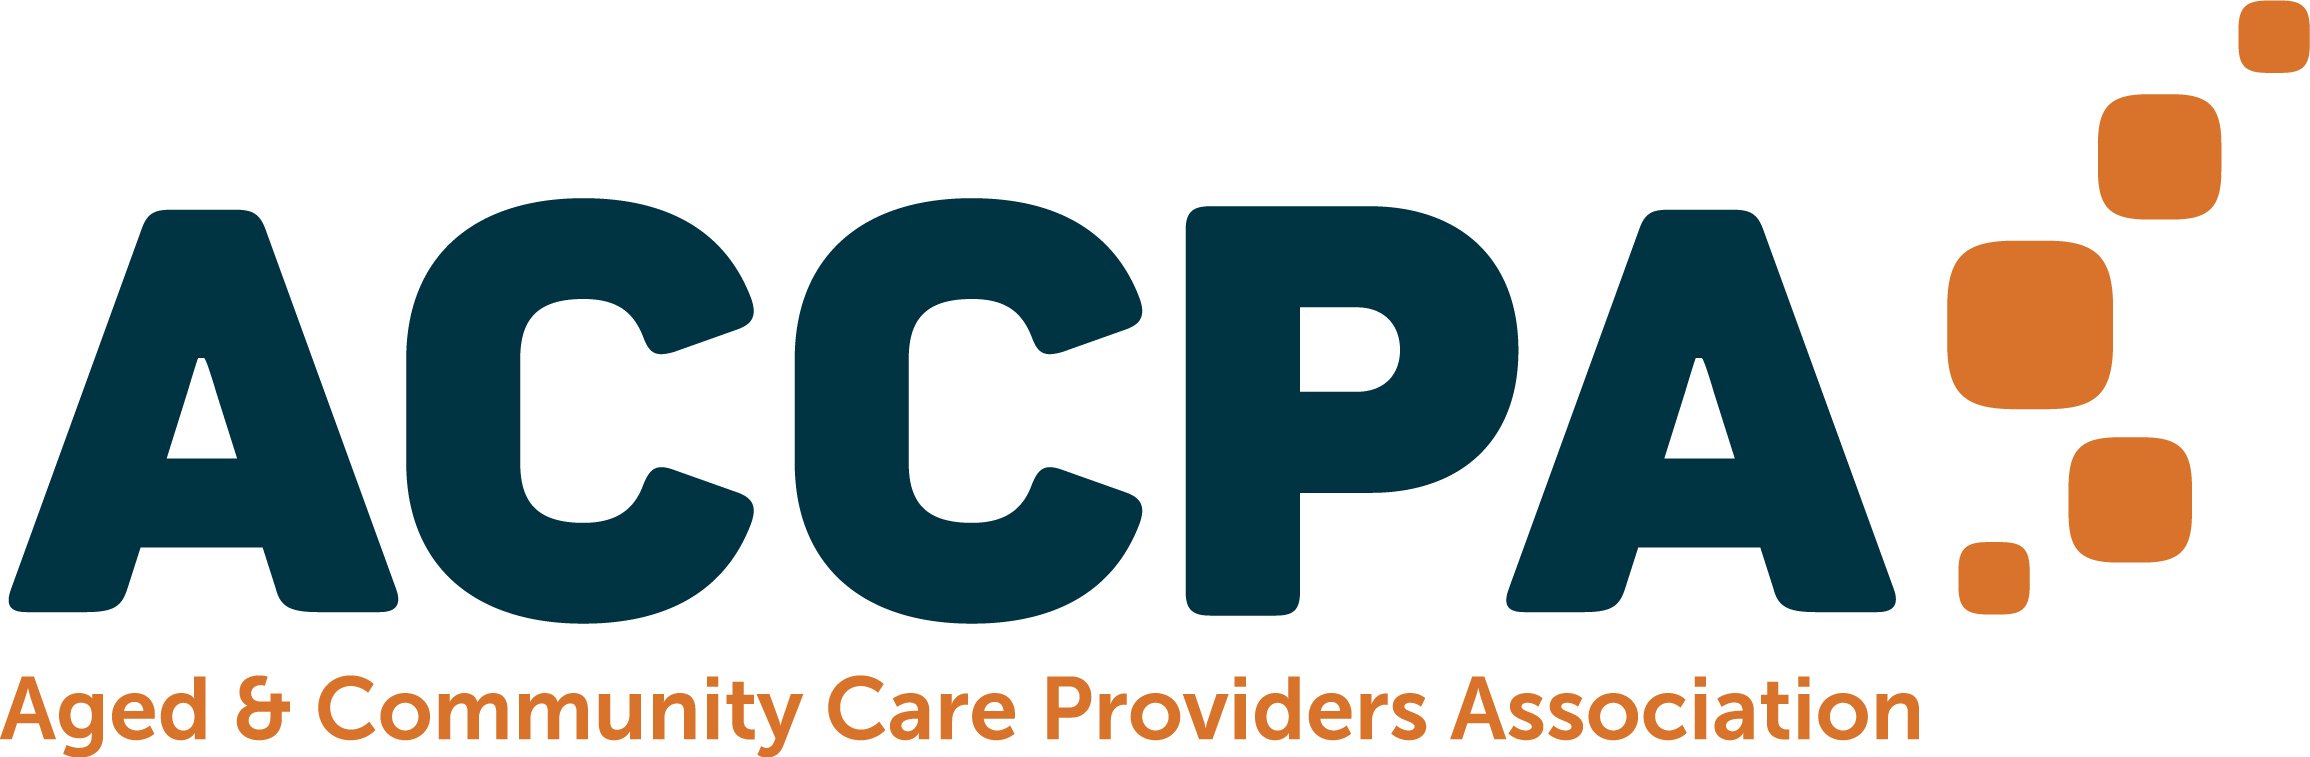 ACCPA-Logo_Primary.jpg